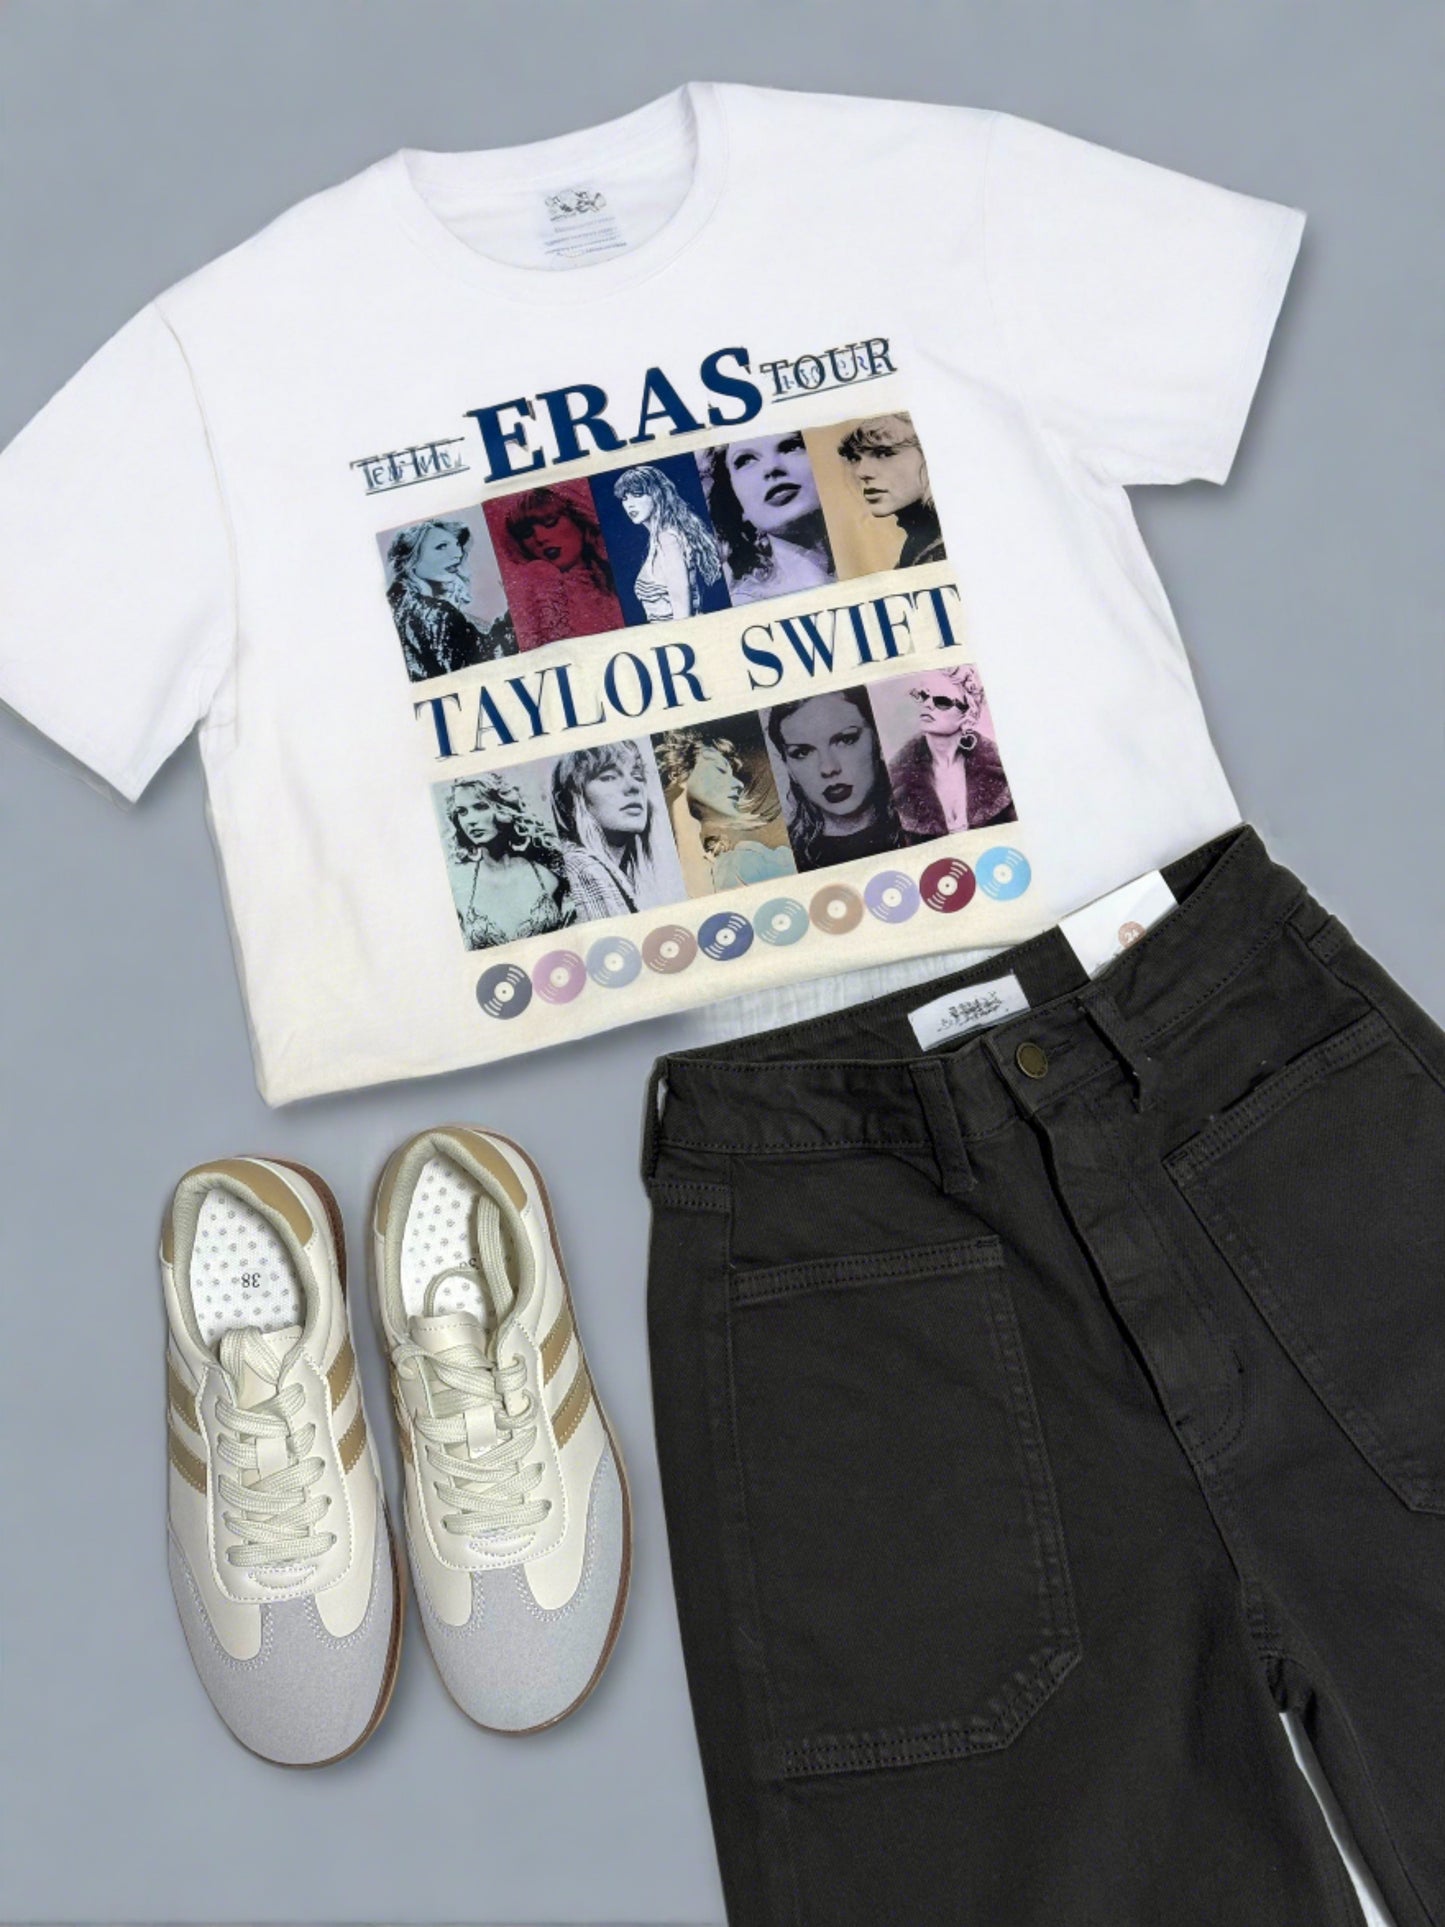 The Eras Tour T-Shirt